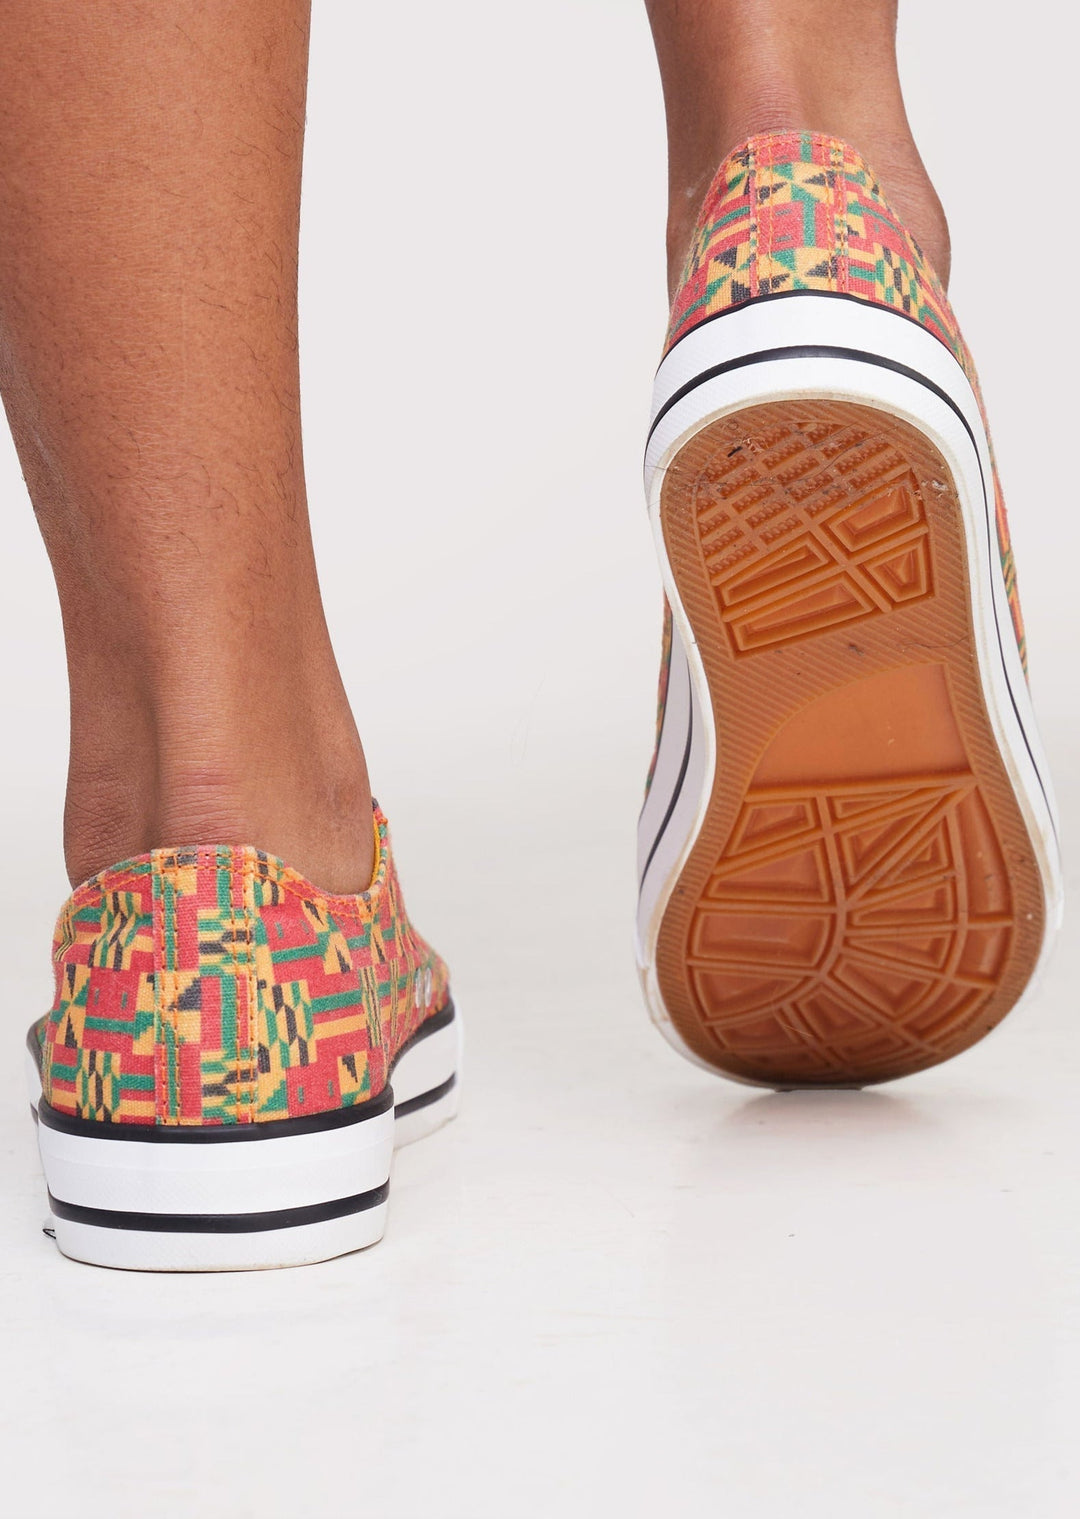 Sneaker ‚Kente‘ für 88€ - mikono.africa Jacken aus Kenia bunte Bomberjacke Partyjacke faire sozial nachhaltig designed in Kenia